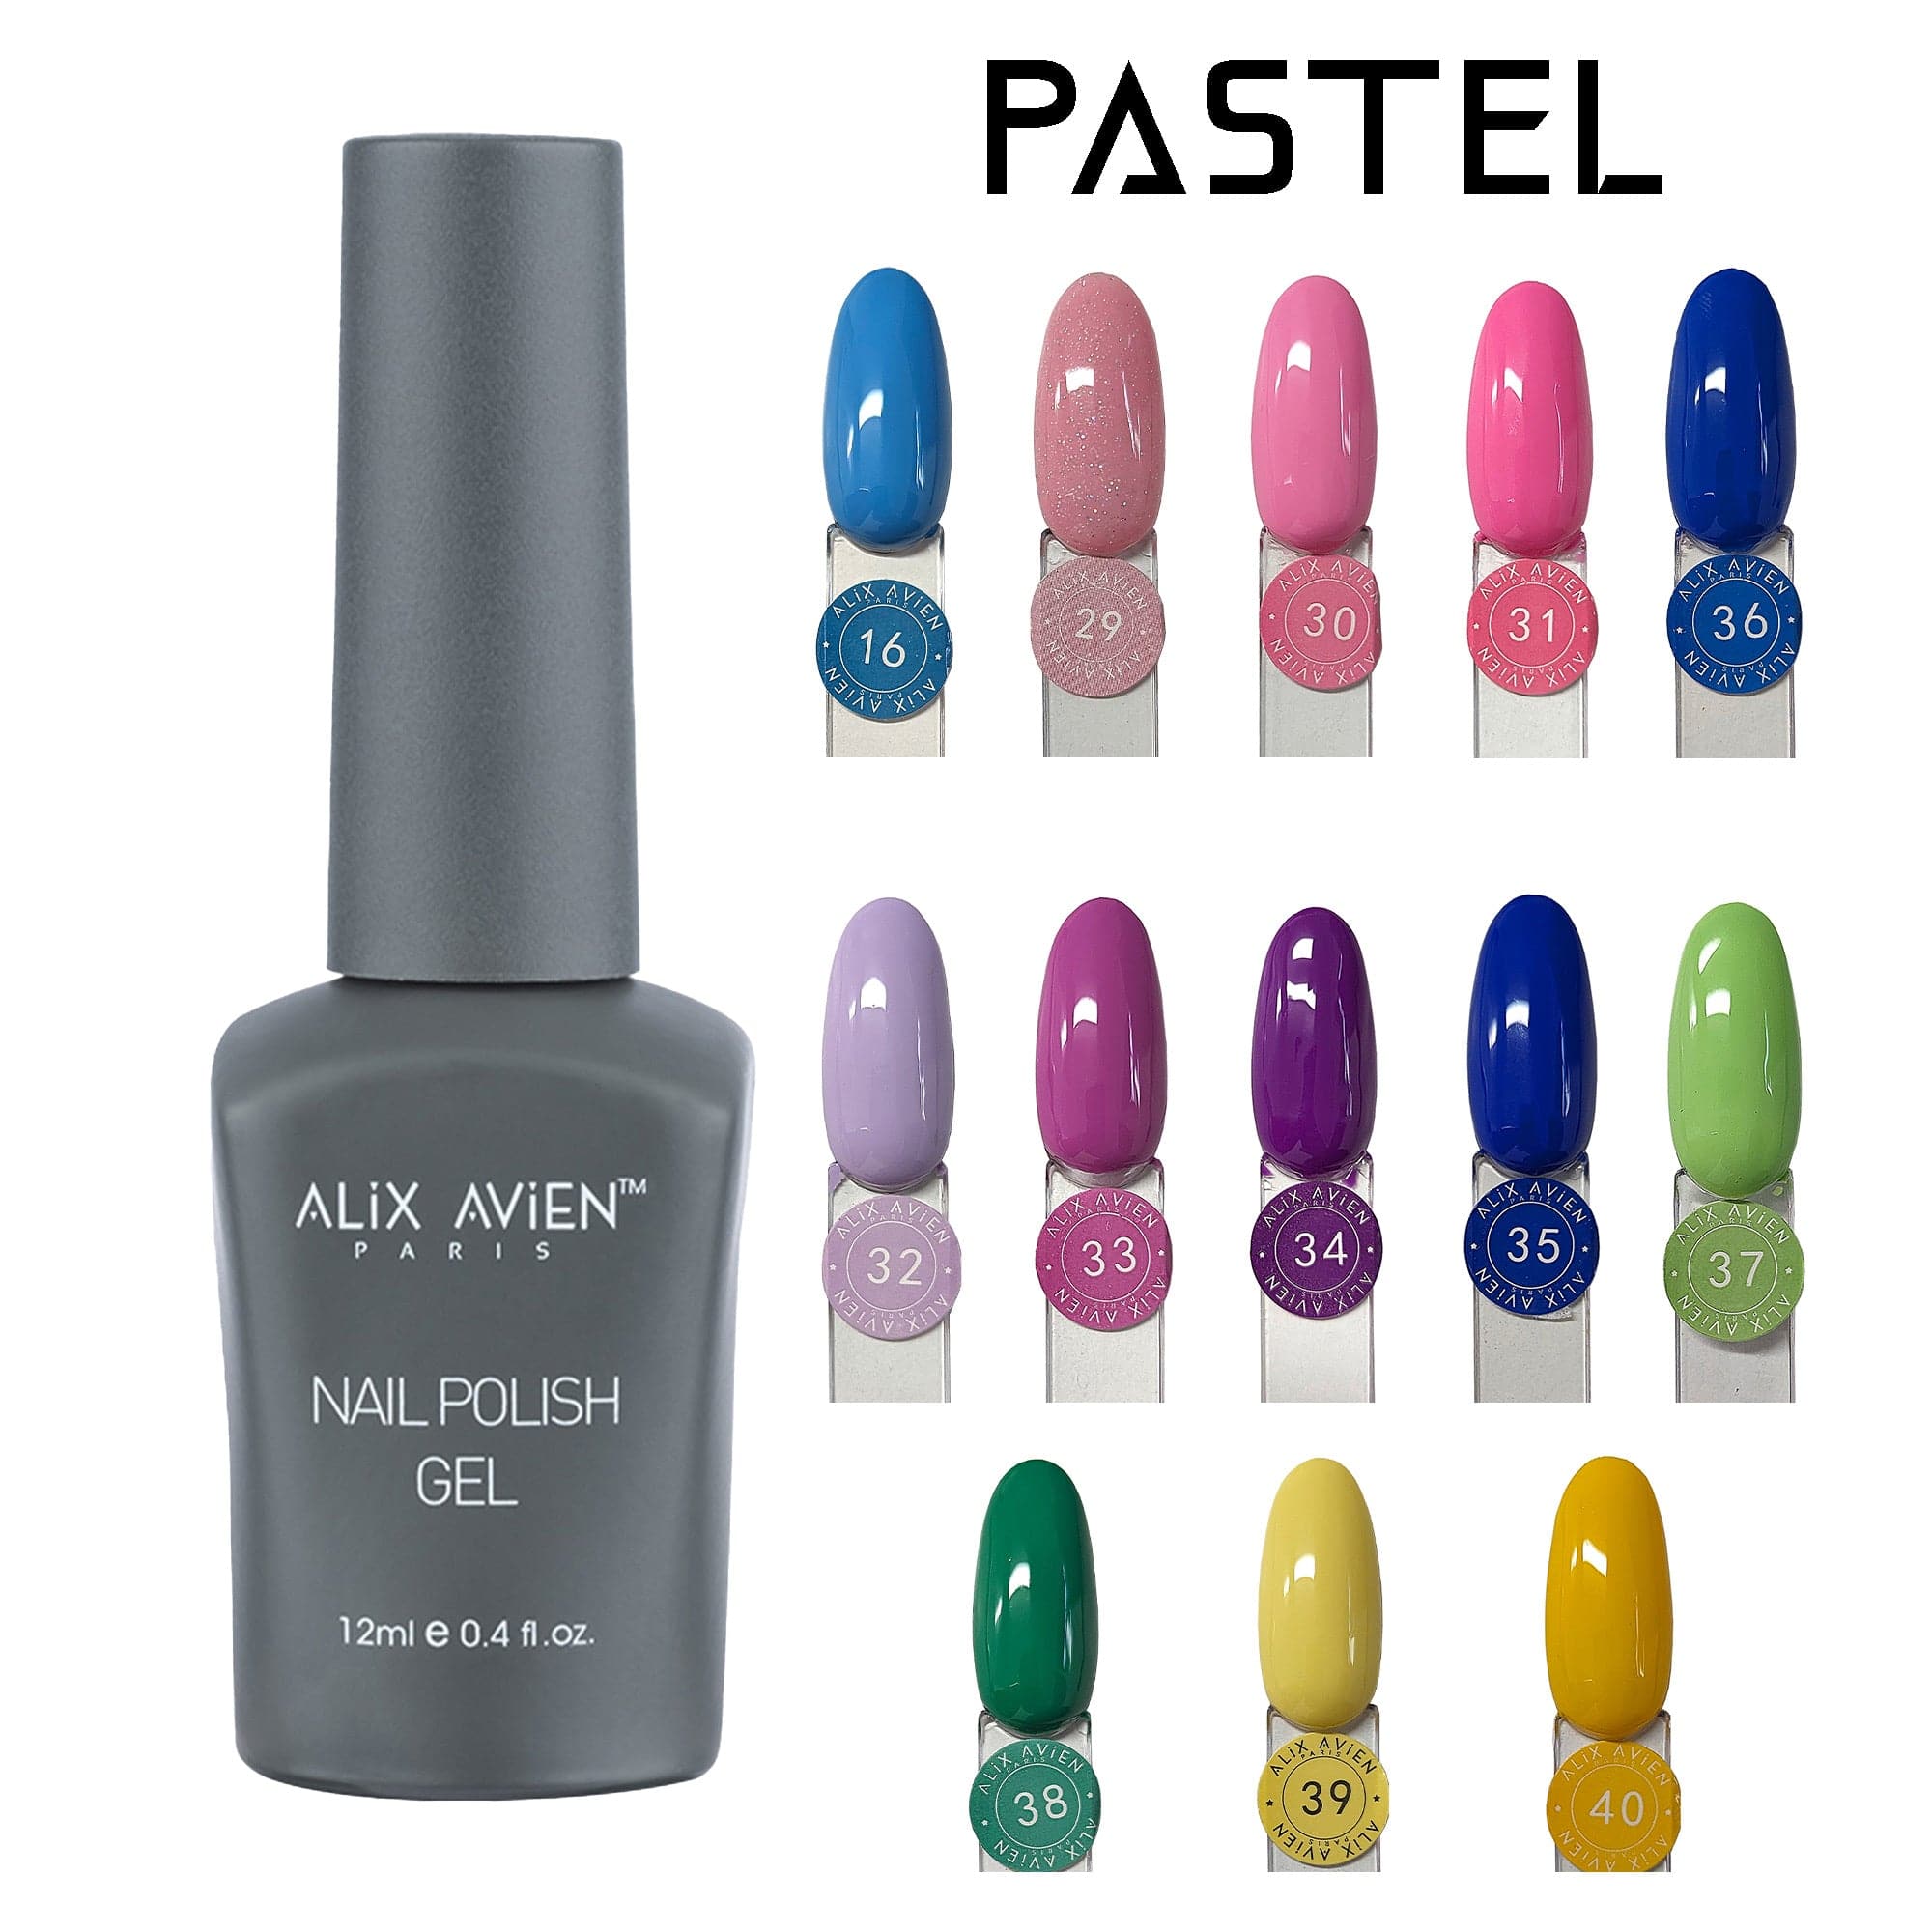 Alix Avien - Nail Polish Gel No.38 (Lime Green) - Eson Direct